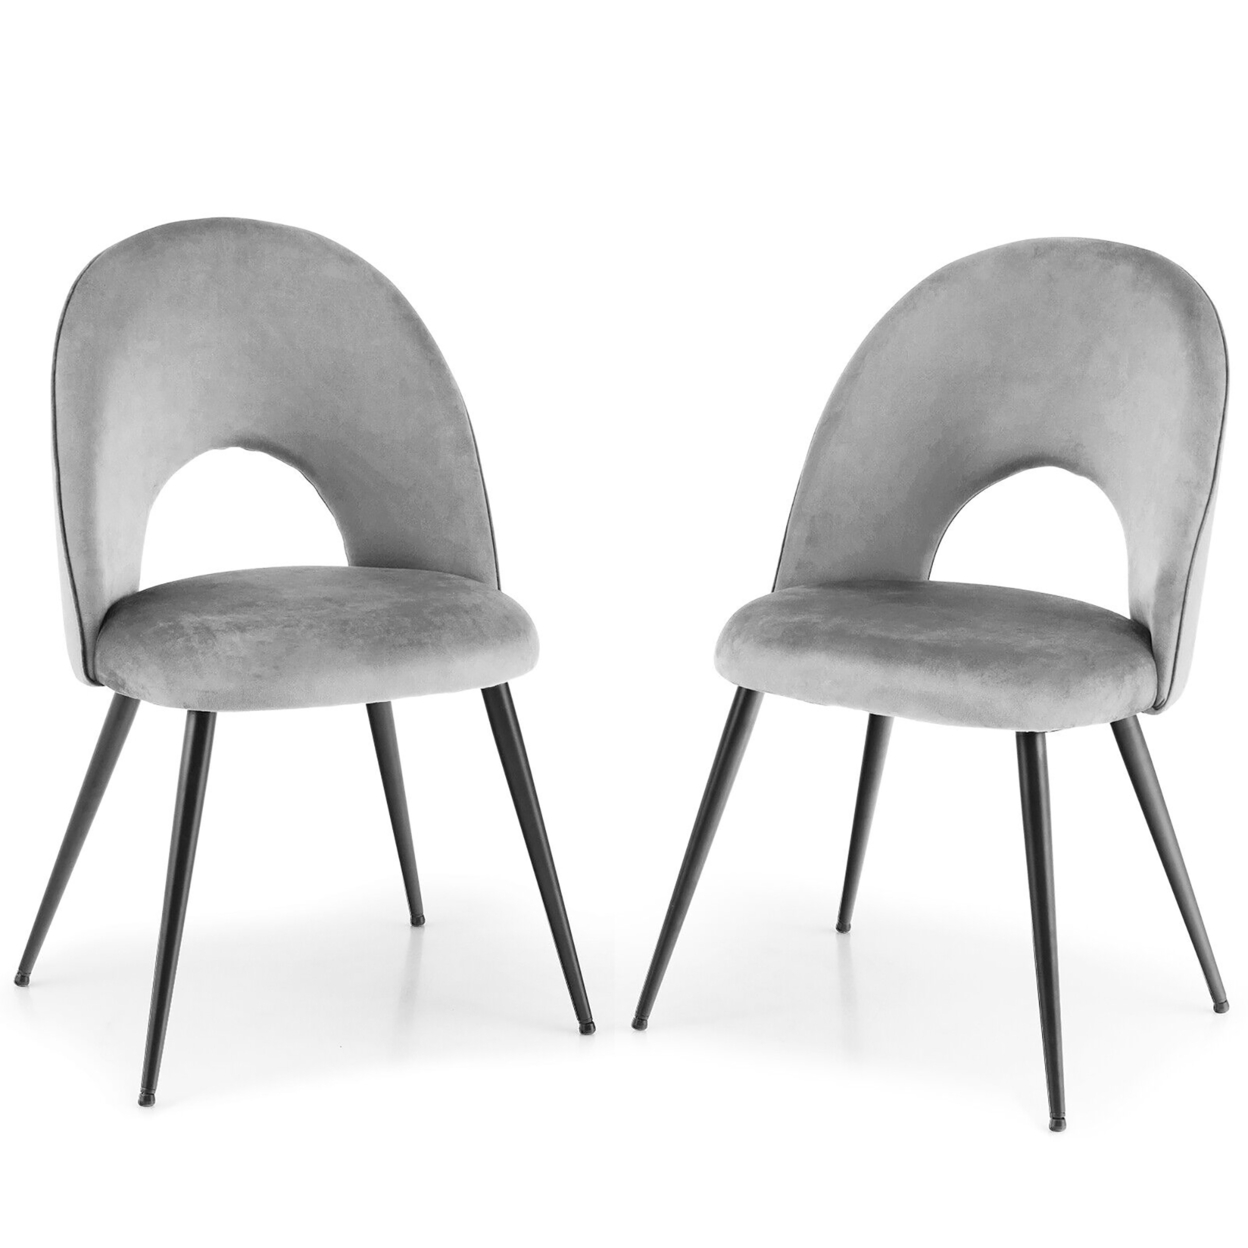 Dining Chair Set Of 2 Velvet Upholstered Side Chair W/ Metal Base For Living Room - Grey